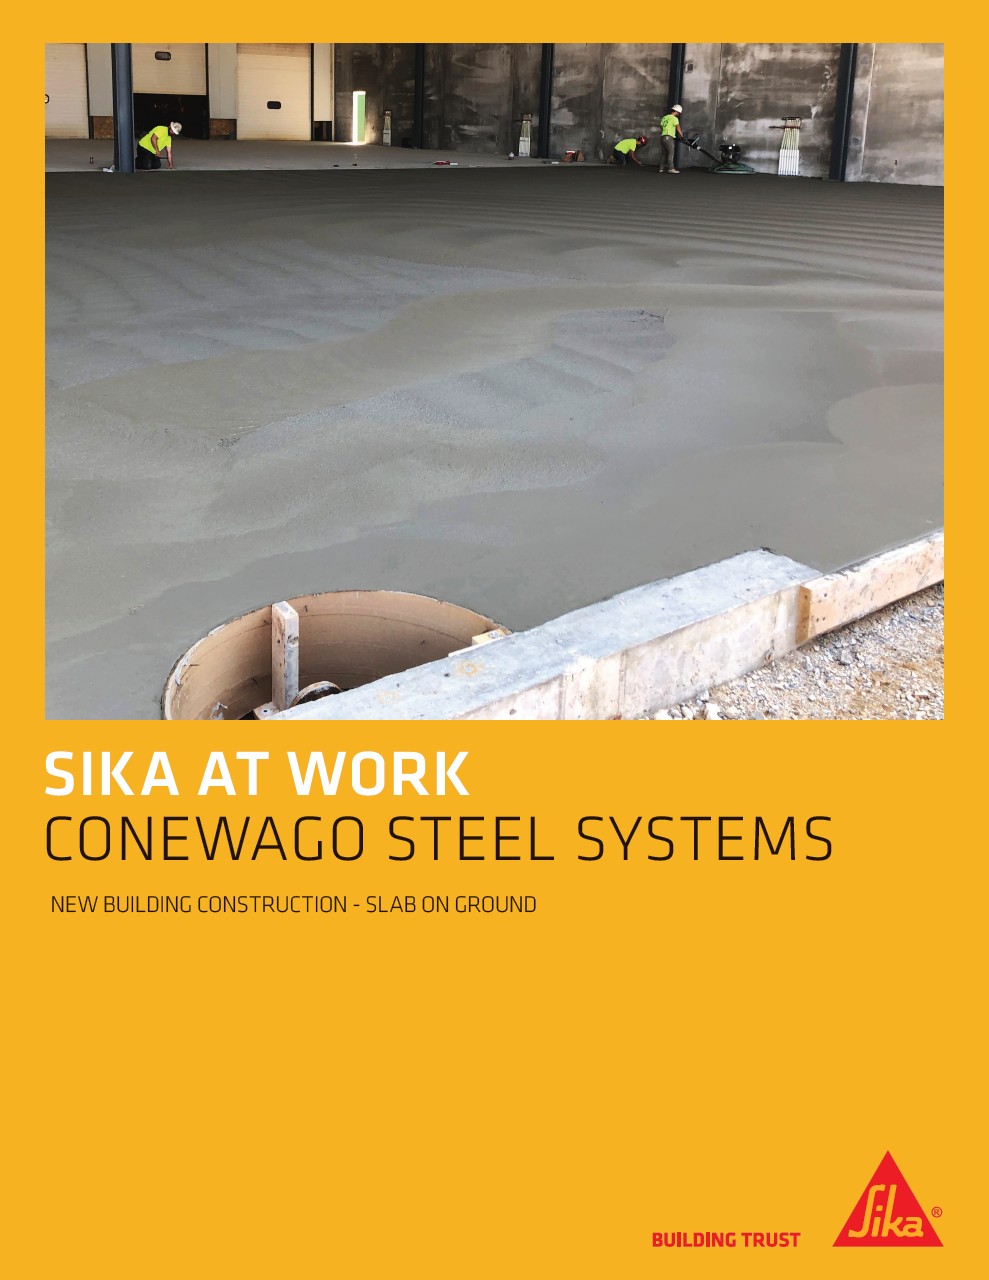 Conewago Steel Systems